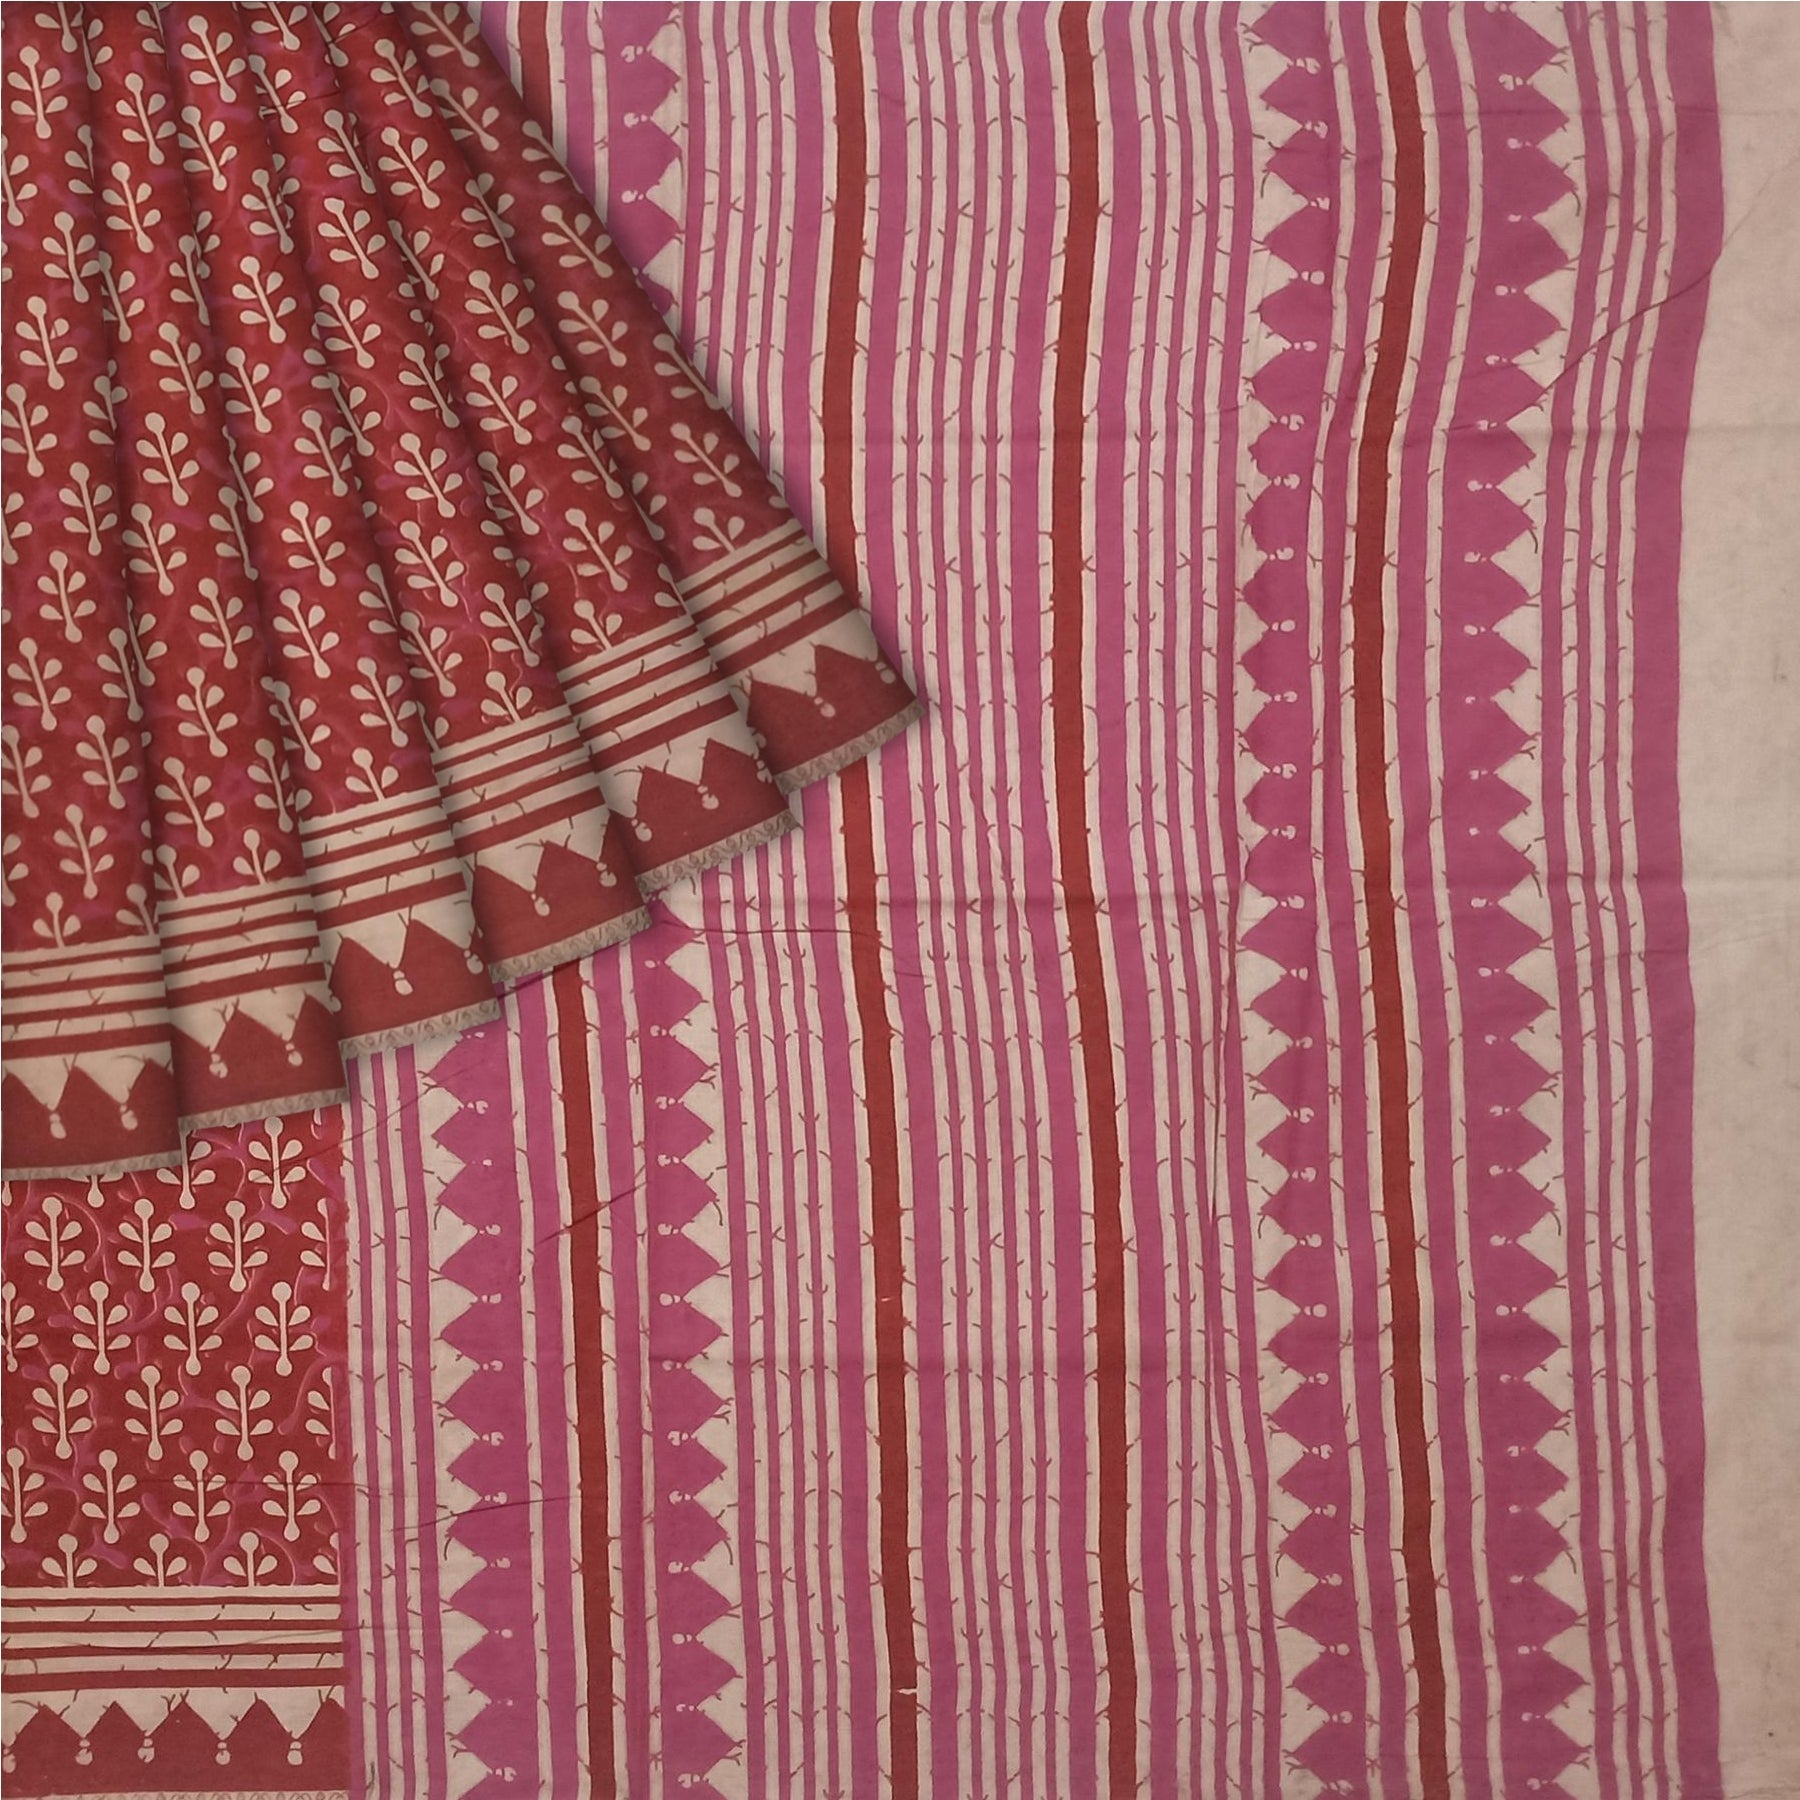 Women's Pedna Kalamkari Hand Printed Mulmul Cotton Saree - Manohara